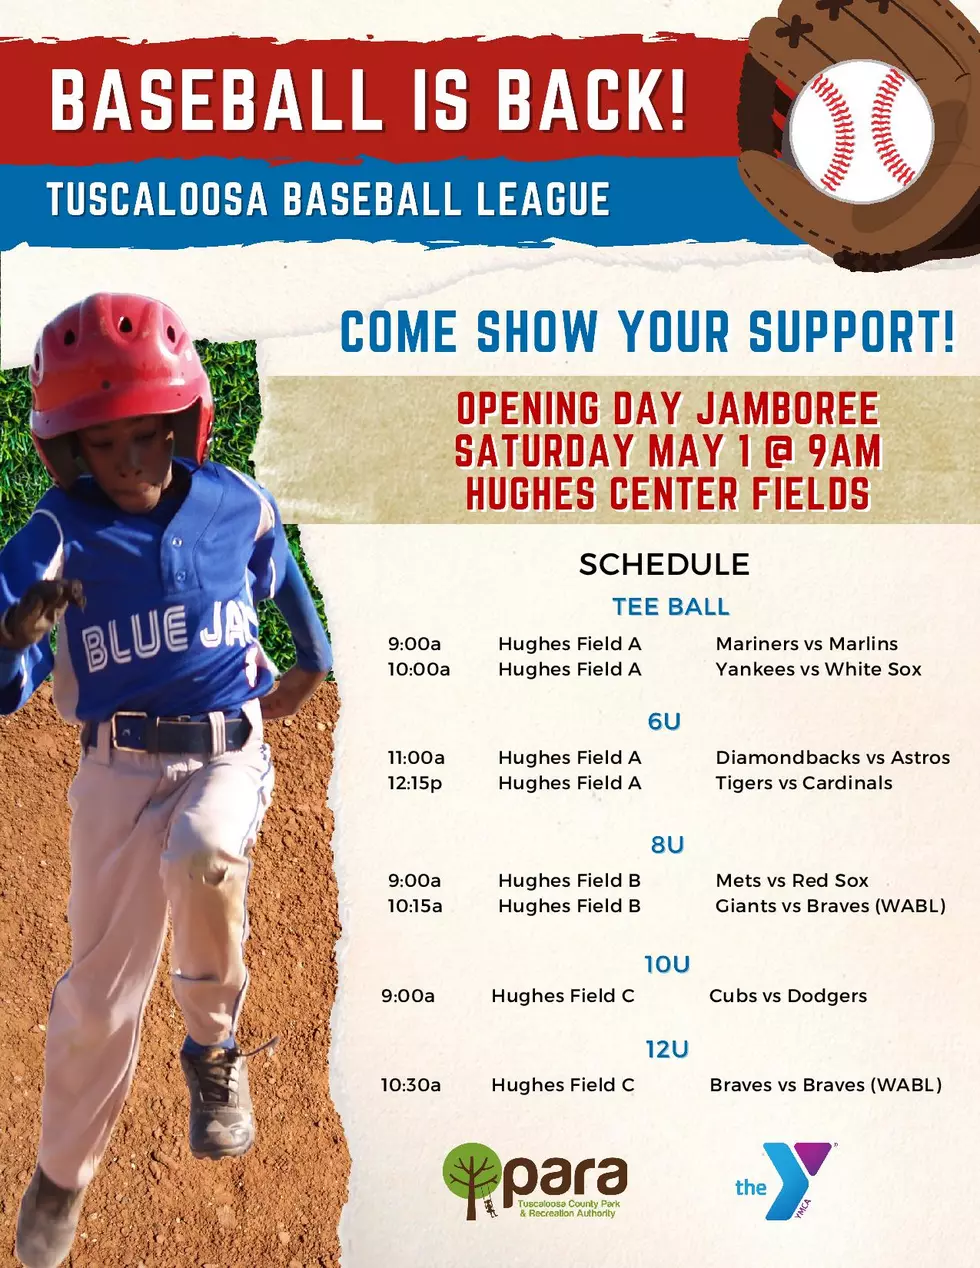 Tuscaloosa Baseball League to Host May Day Baseball Jamboree